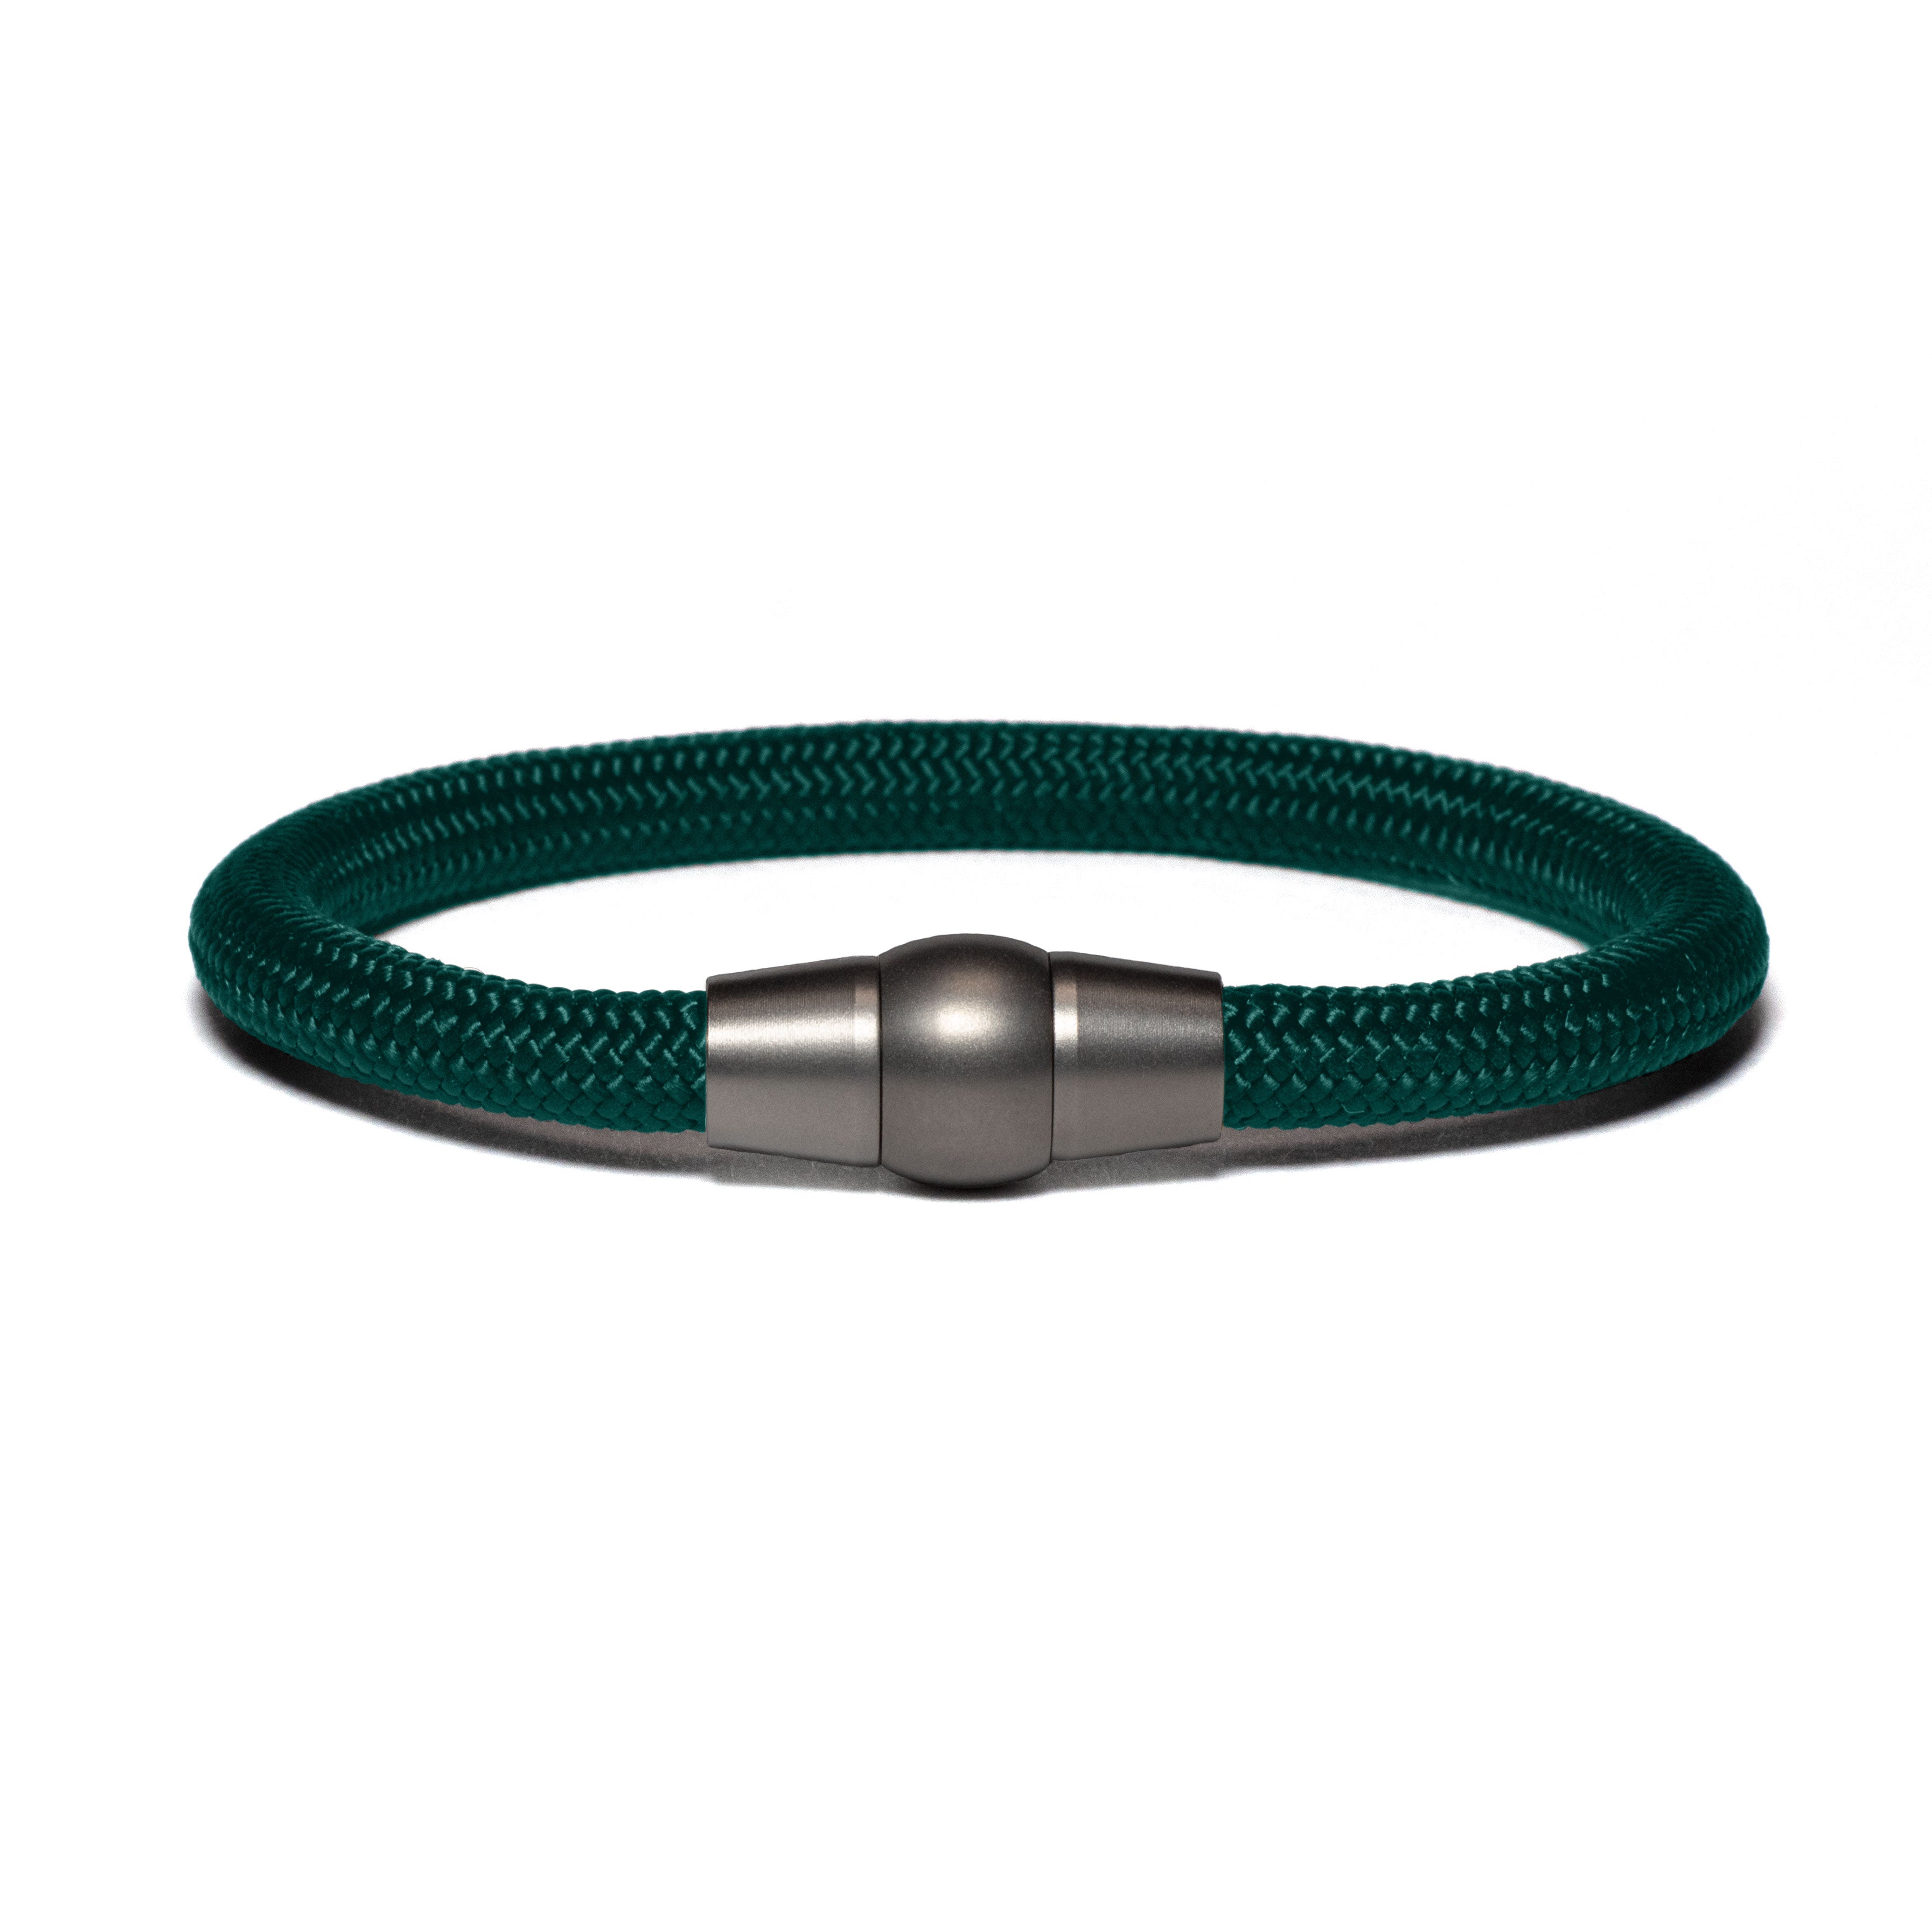 Bracelet basic - dark green paracord